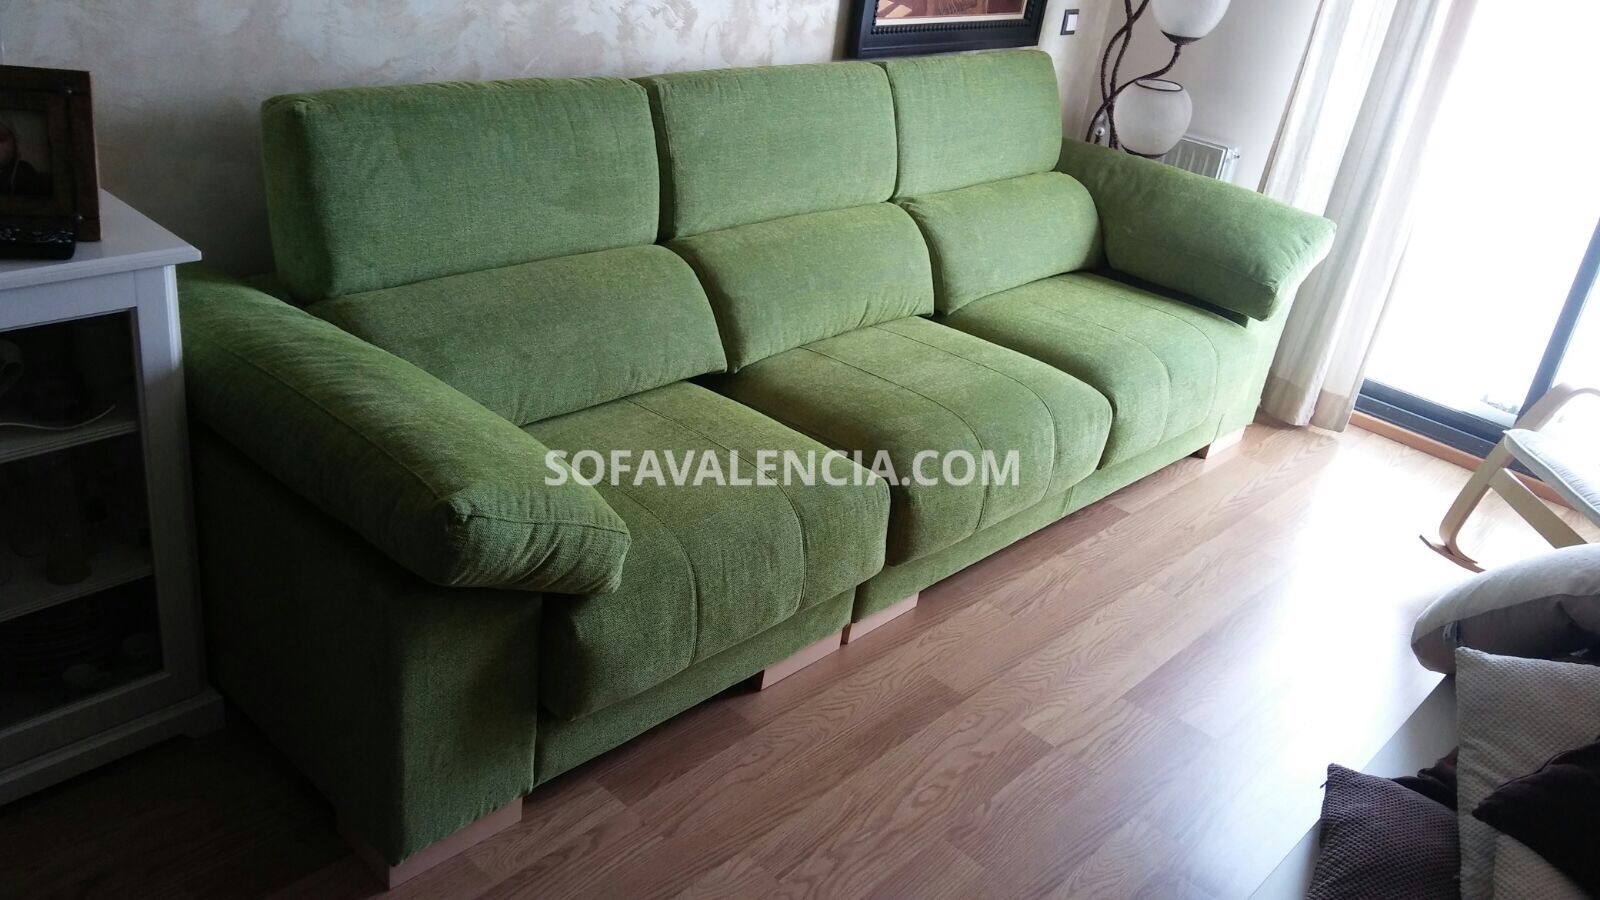 sofa-valencia-fotos-clientes-60